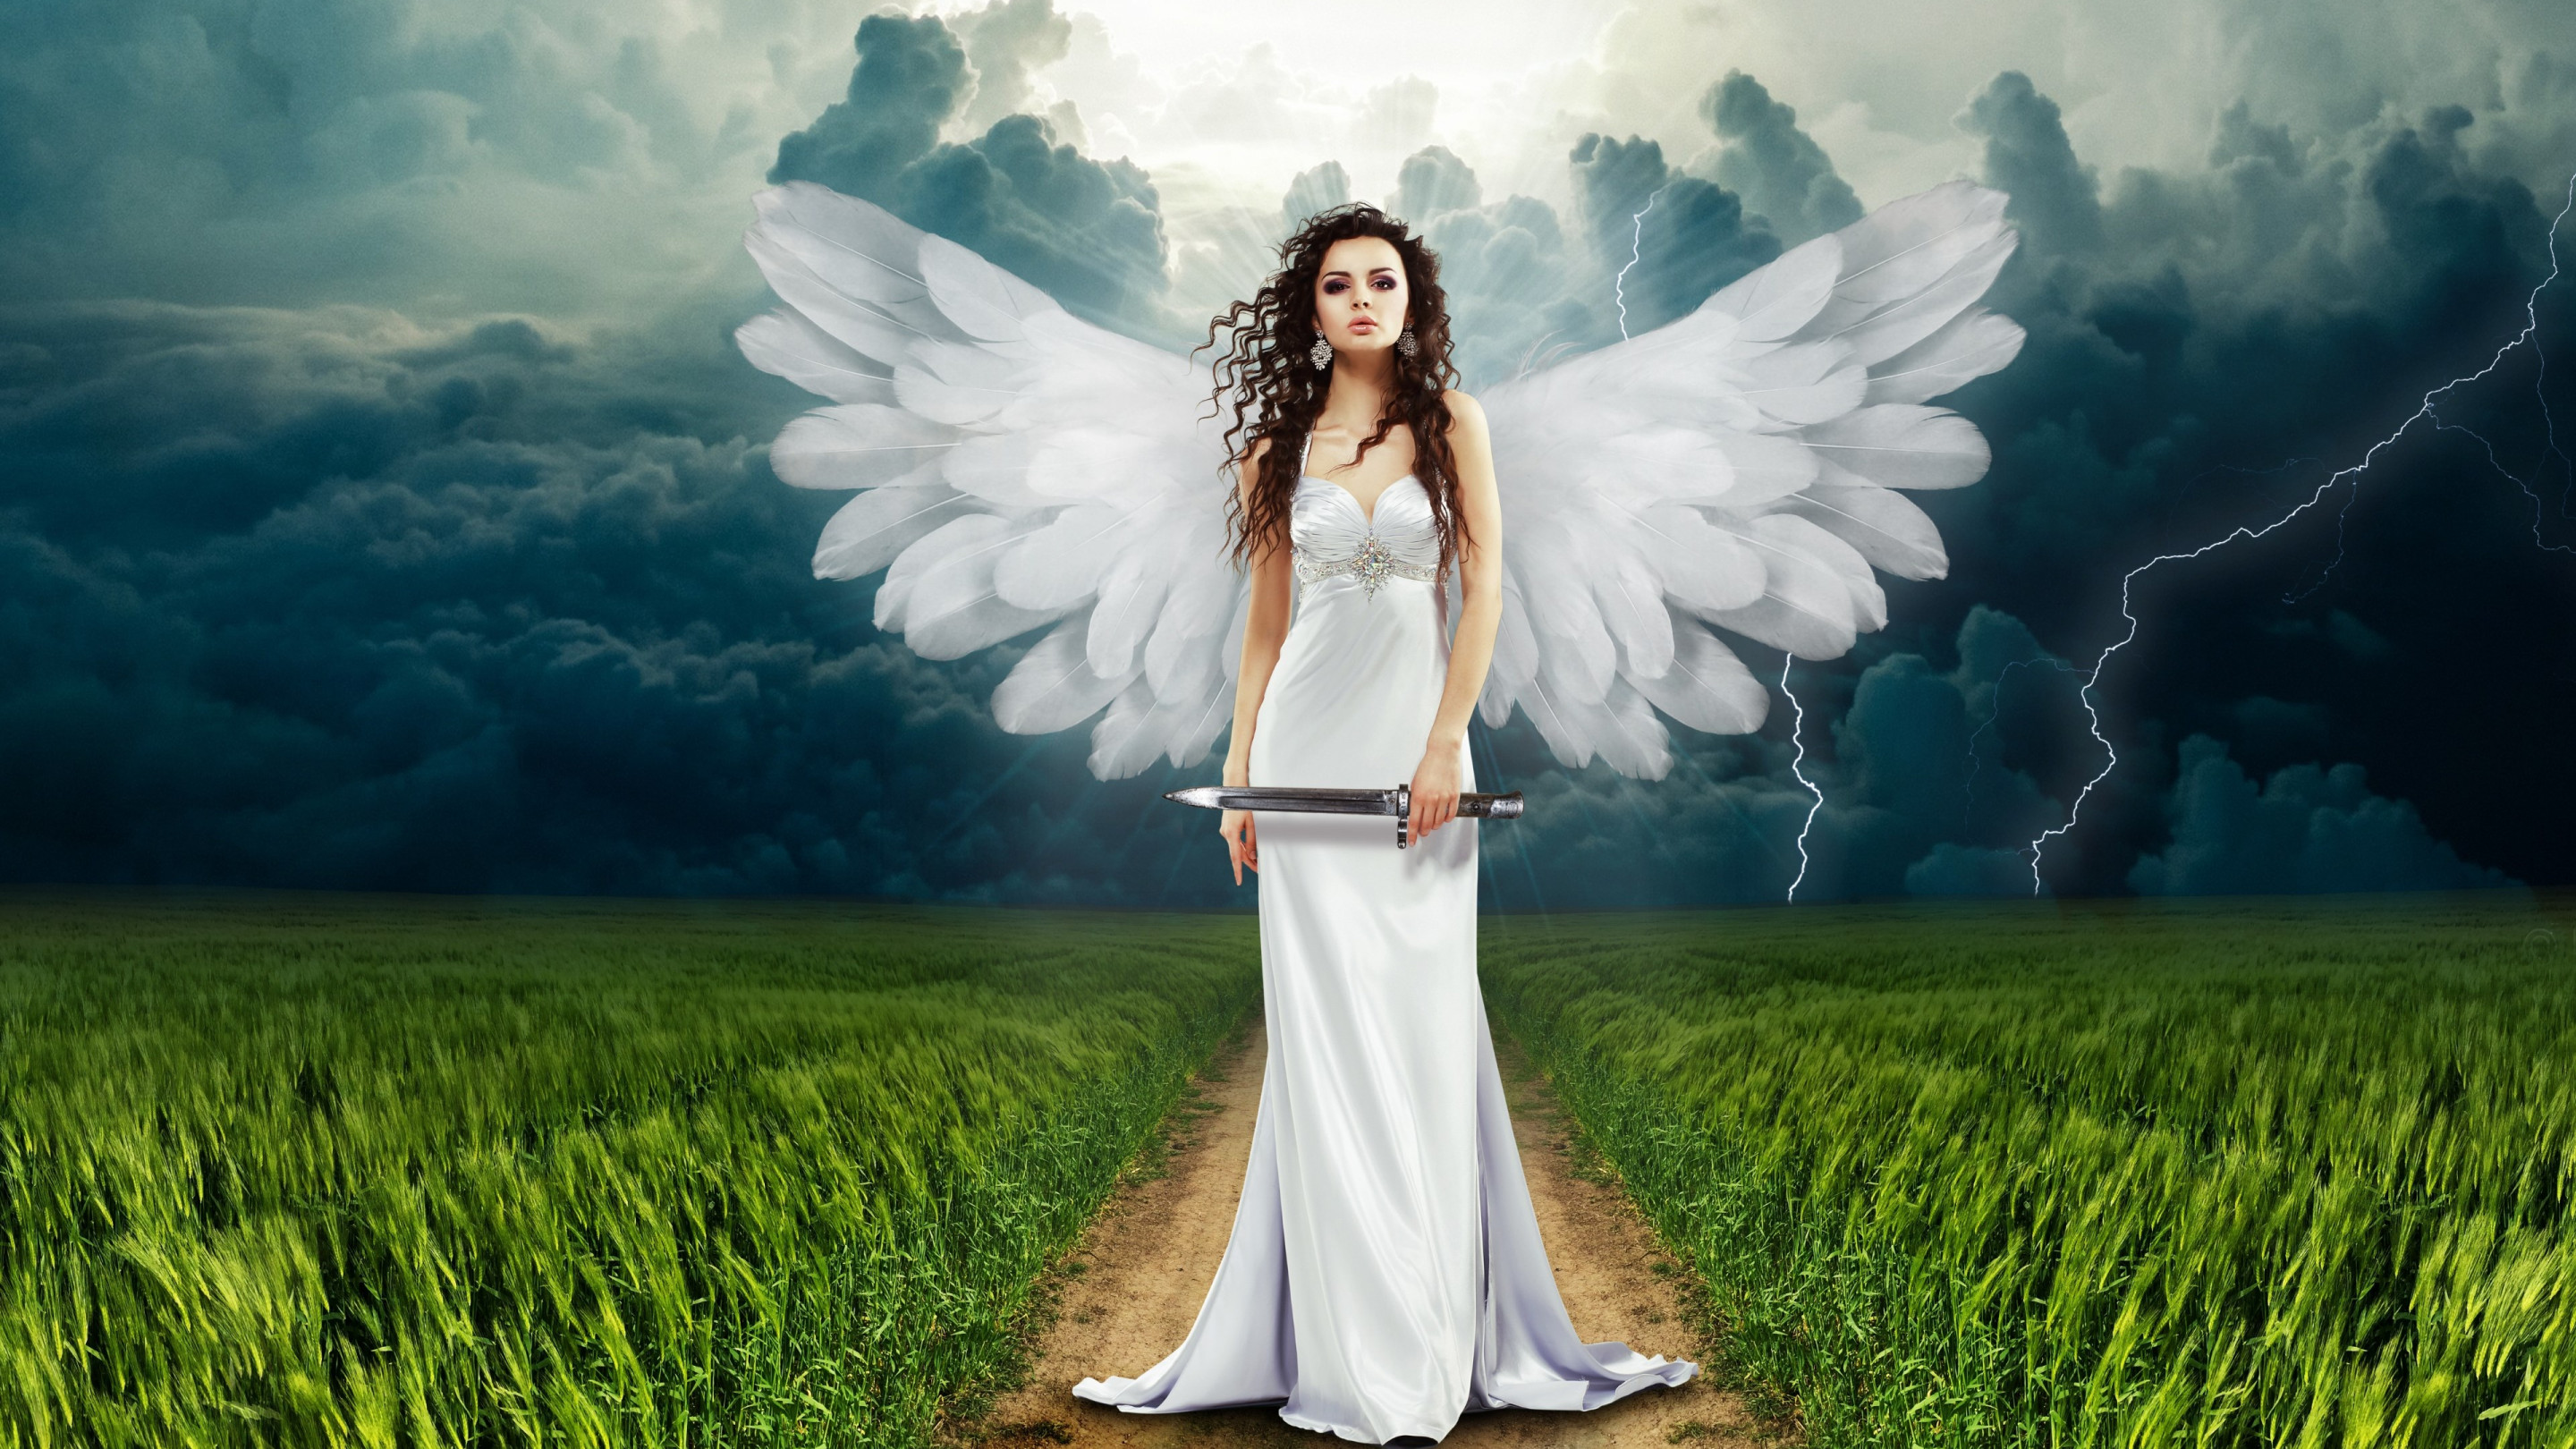 Illustration: Angel art wallpaper 2880x1620